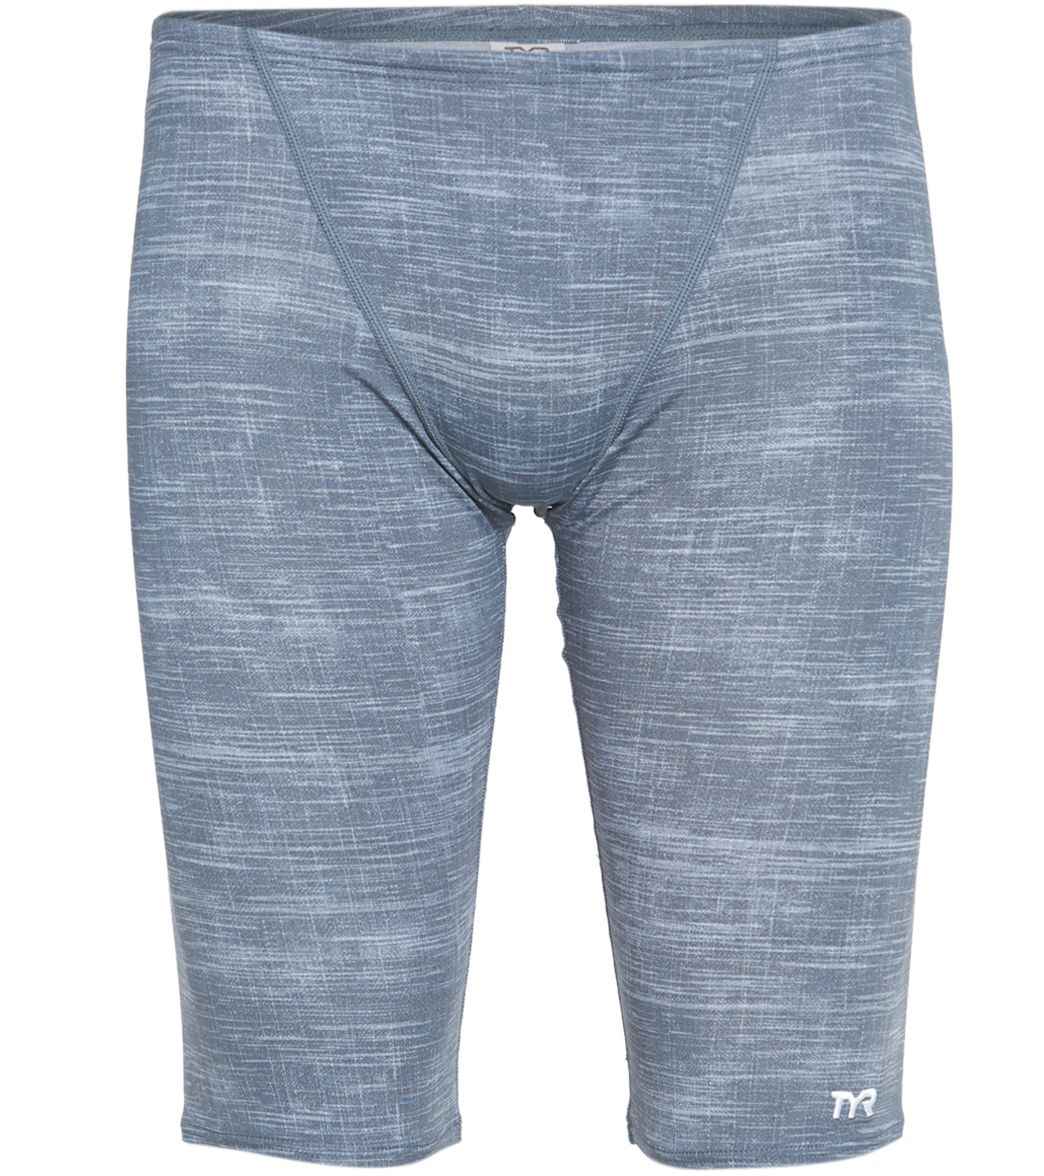 TYR Men's Sandblast All Over Jammer Swimsuit - Grey 28 Polyester - Swimoutlet.com